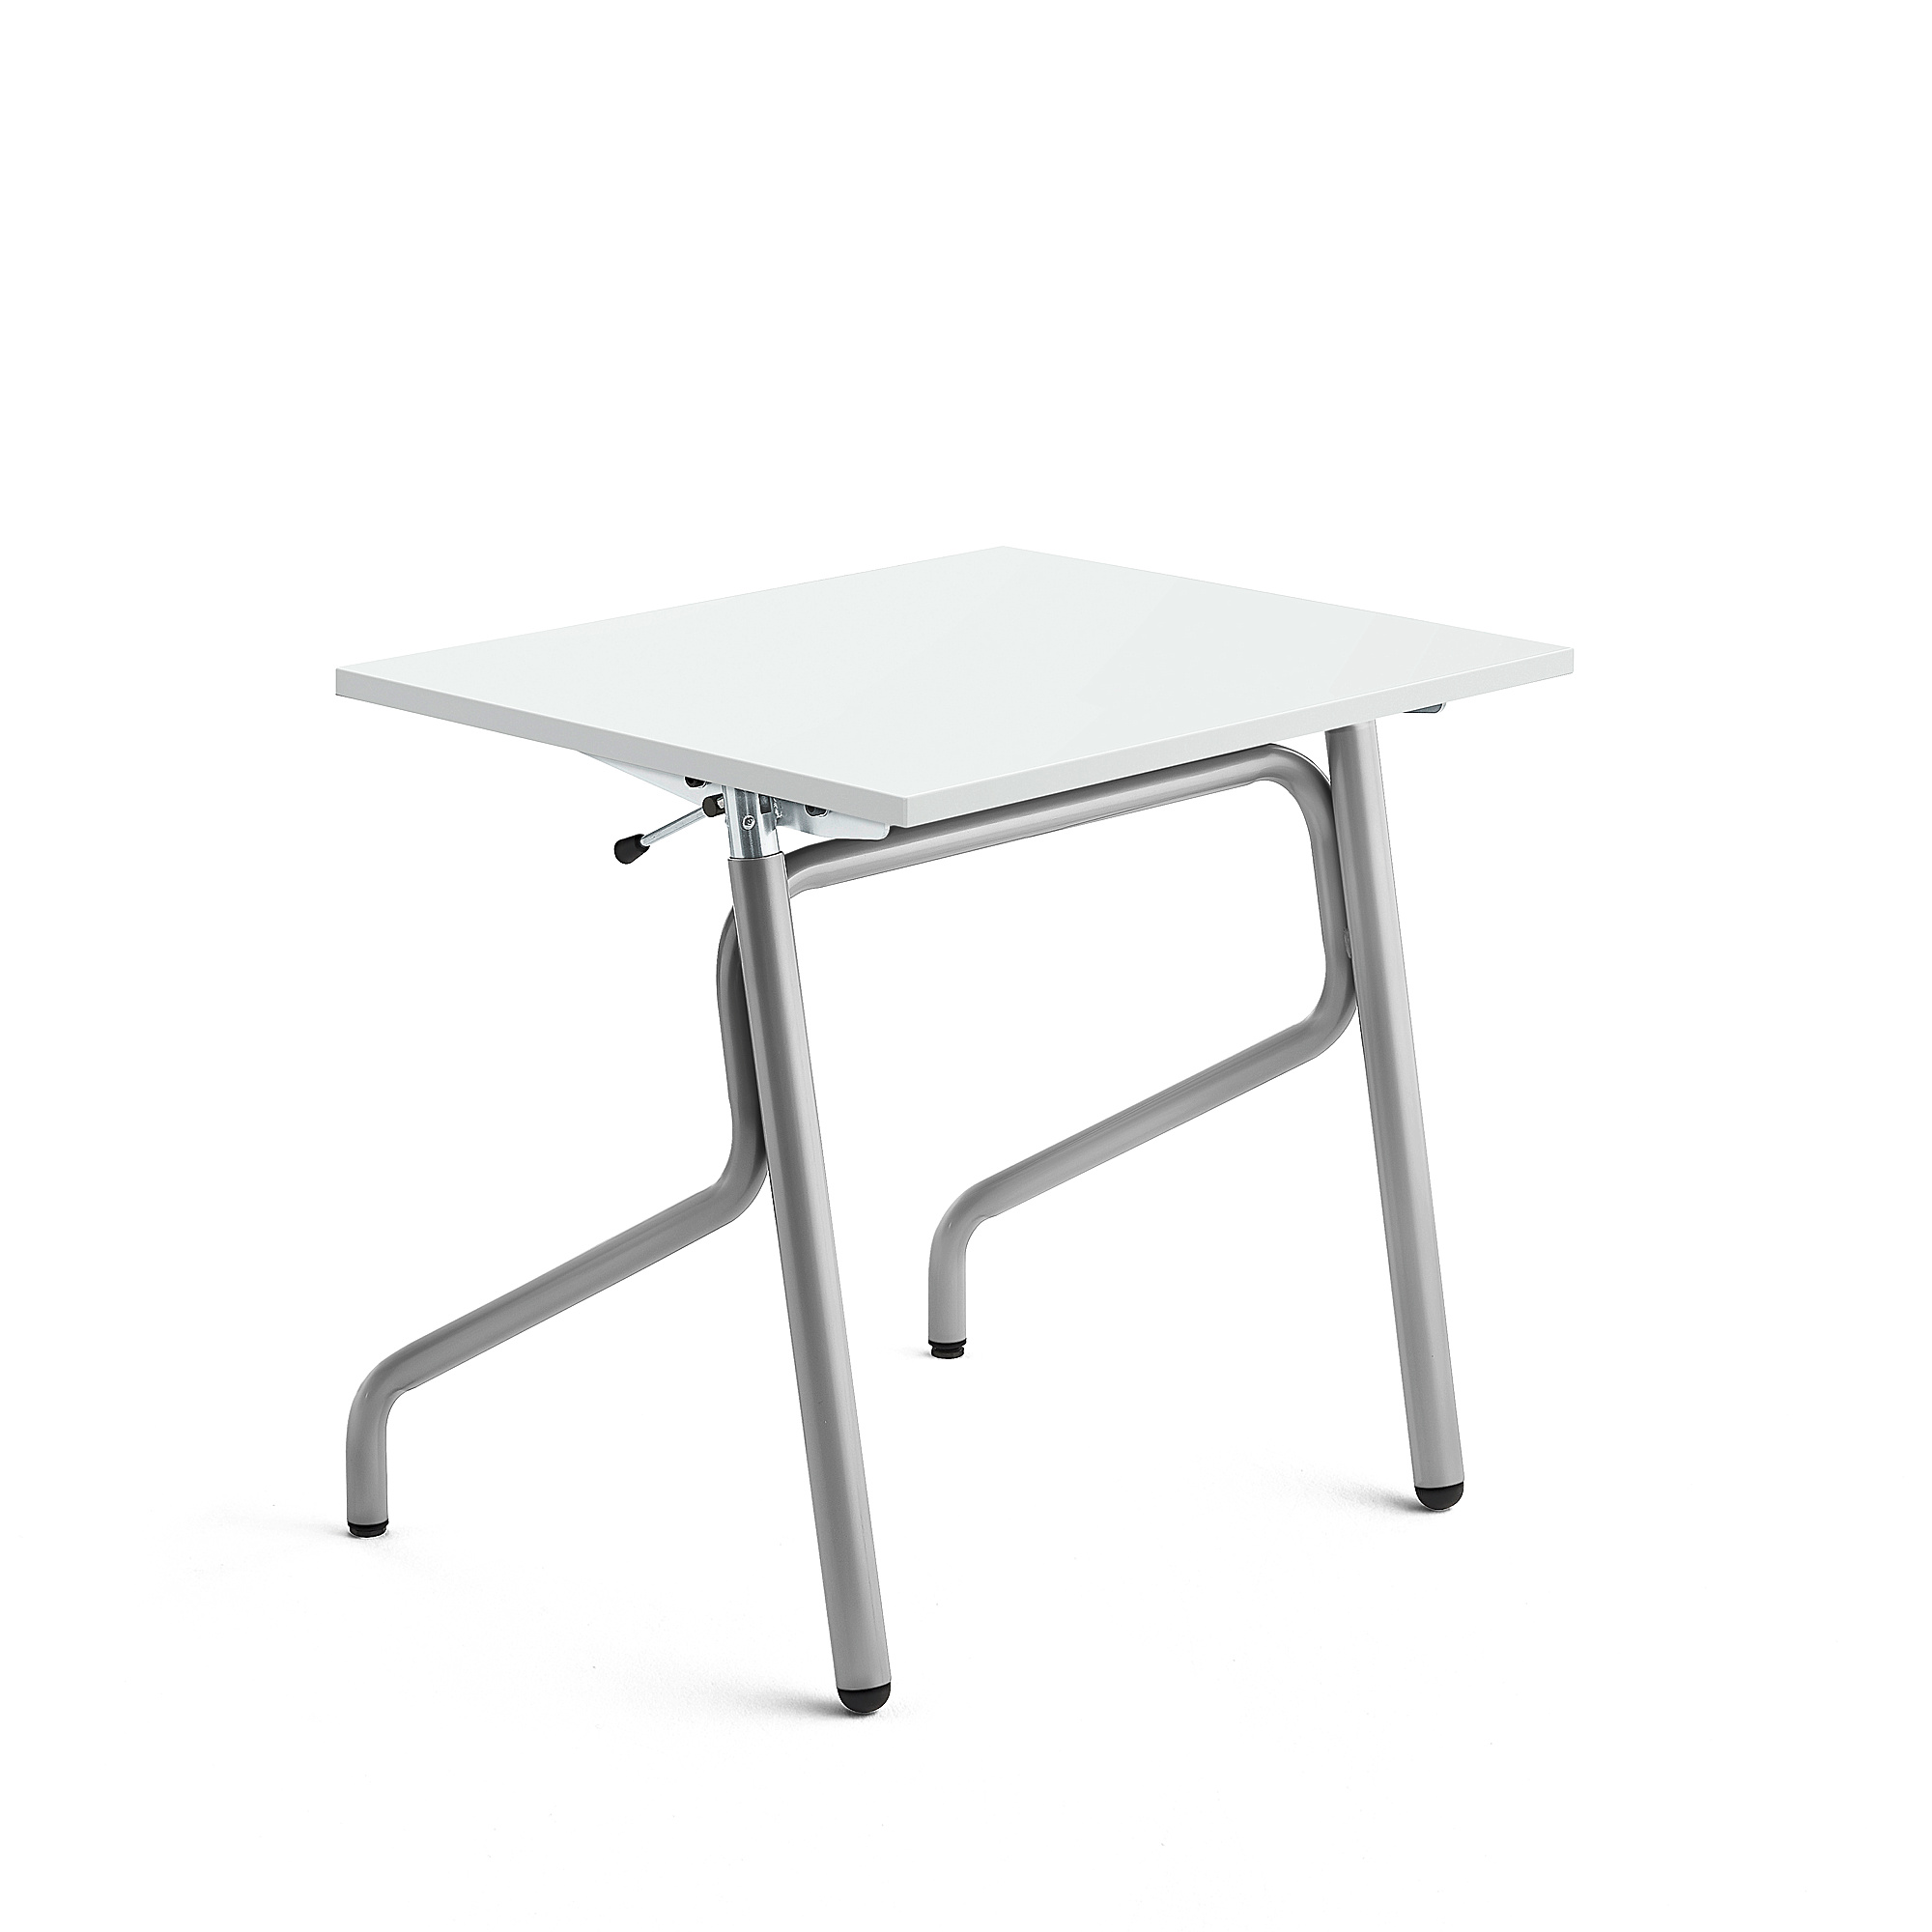 E-shop Nastaviteľná školská lavica ADJUST, 700x600 mm, HPL - biela, strieborná